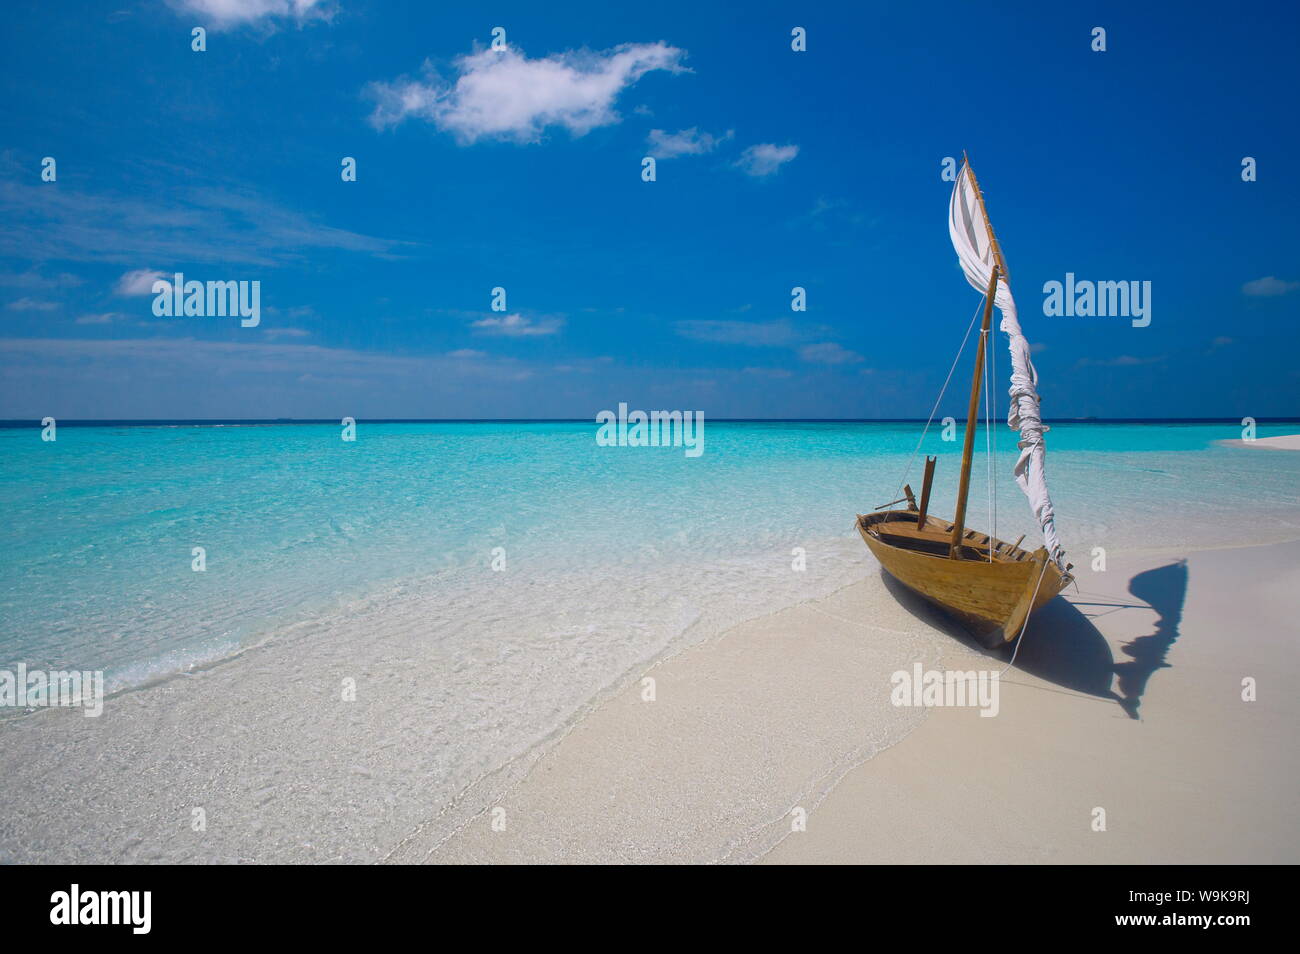 Traditionelles Dhoni am Strand, Malediven, Indischer Ozean, Asien Stockfoto